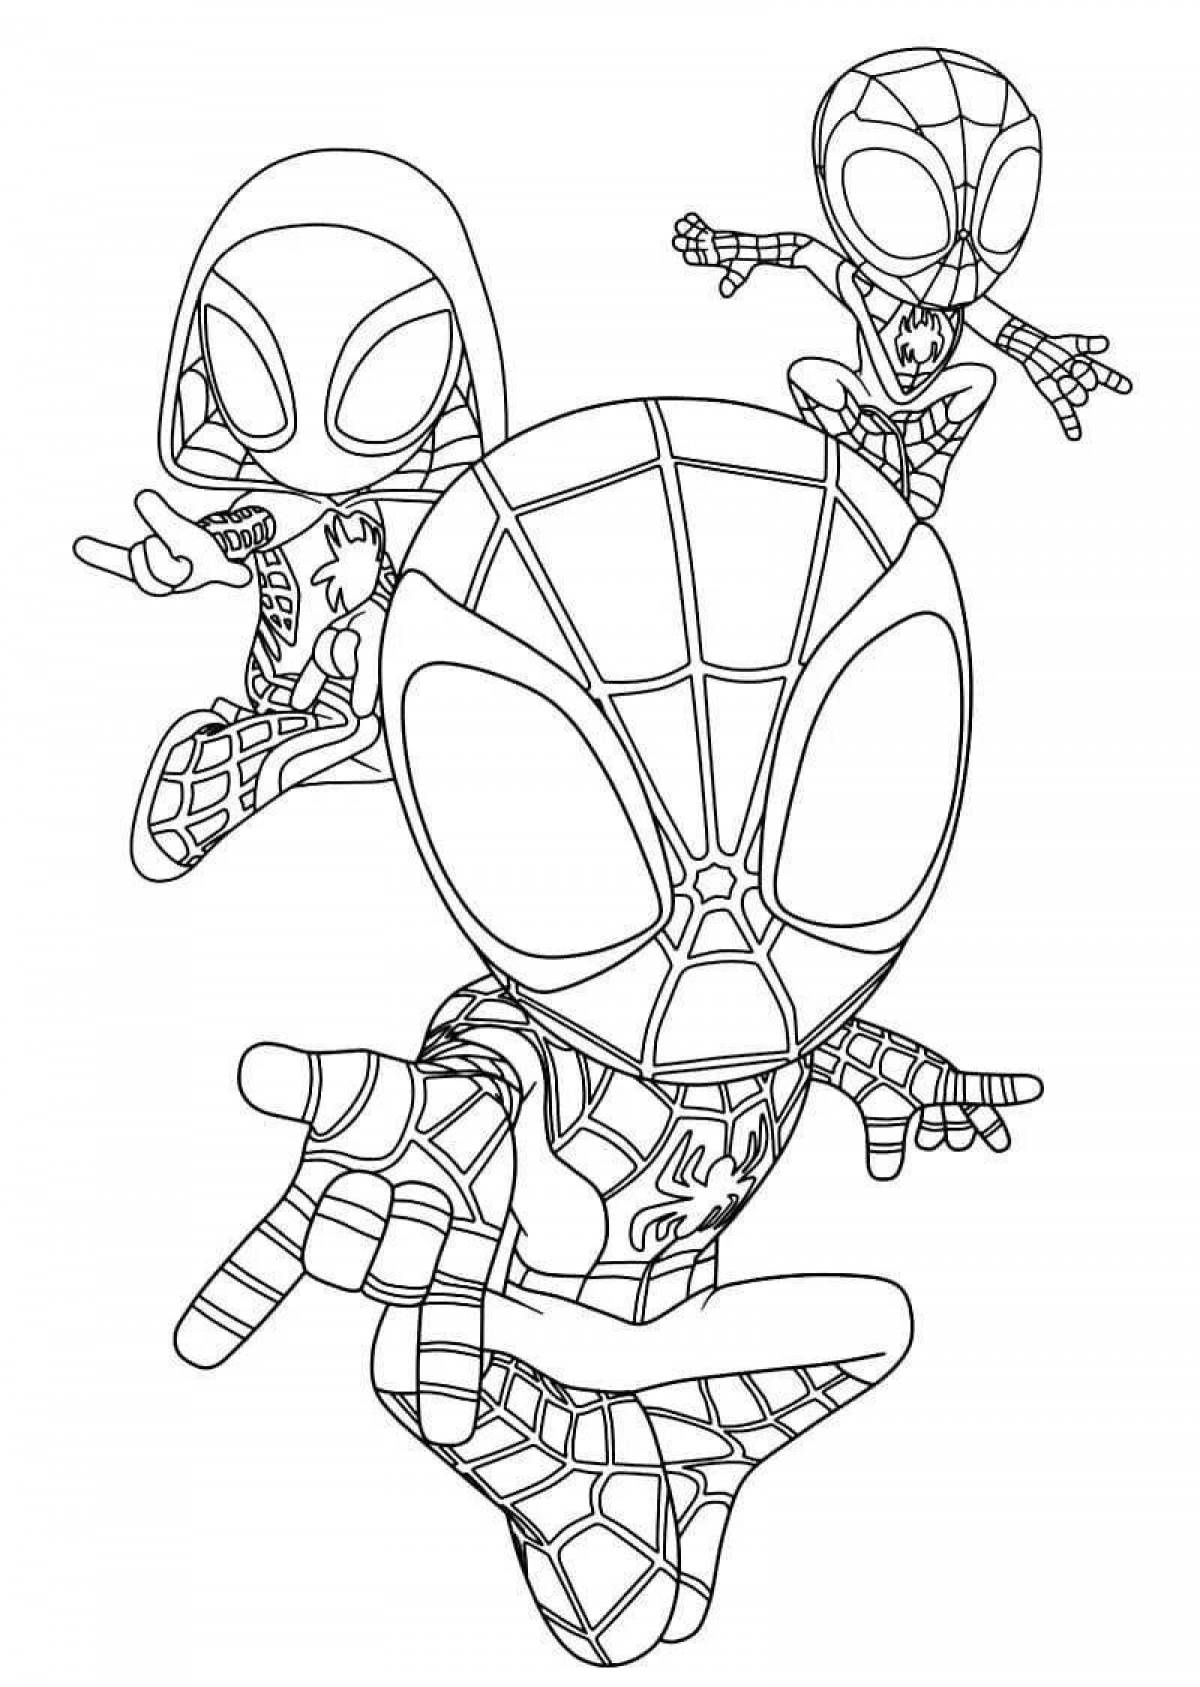 Magical Spider-Man antistress coloring book